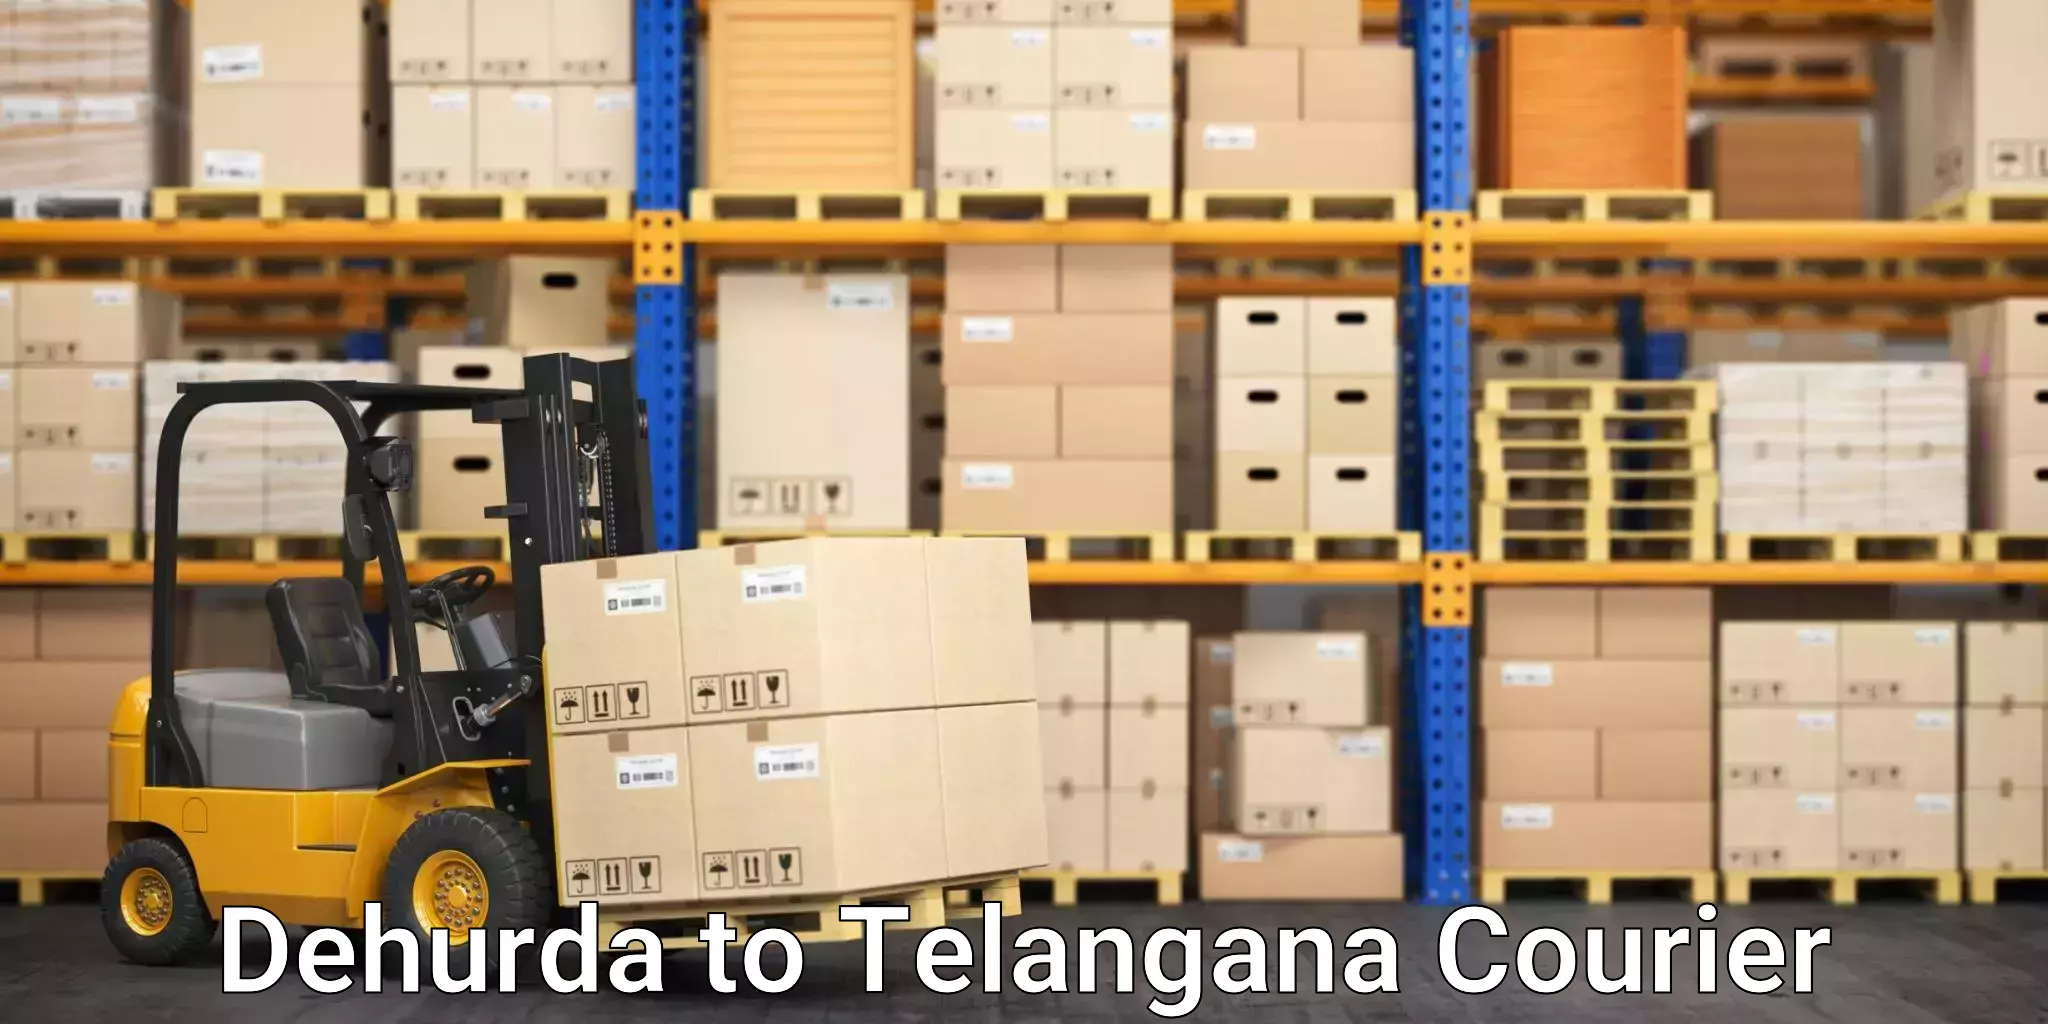 Bulk shipping discounts Dehurda to Tallada